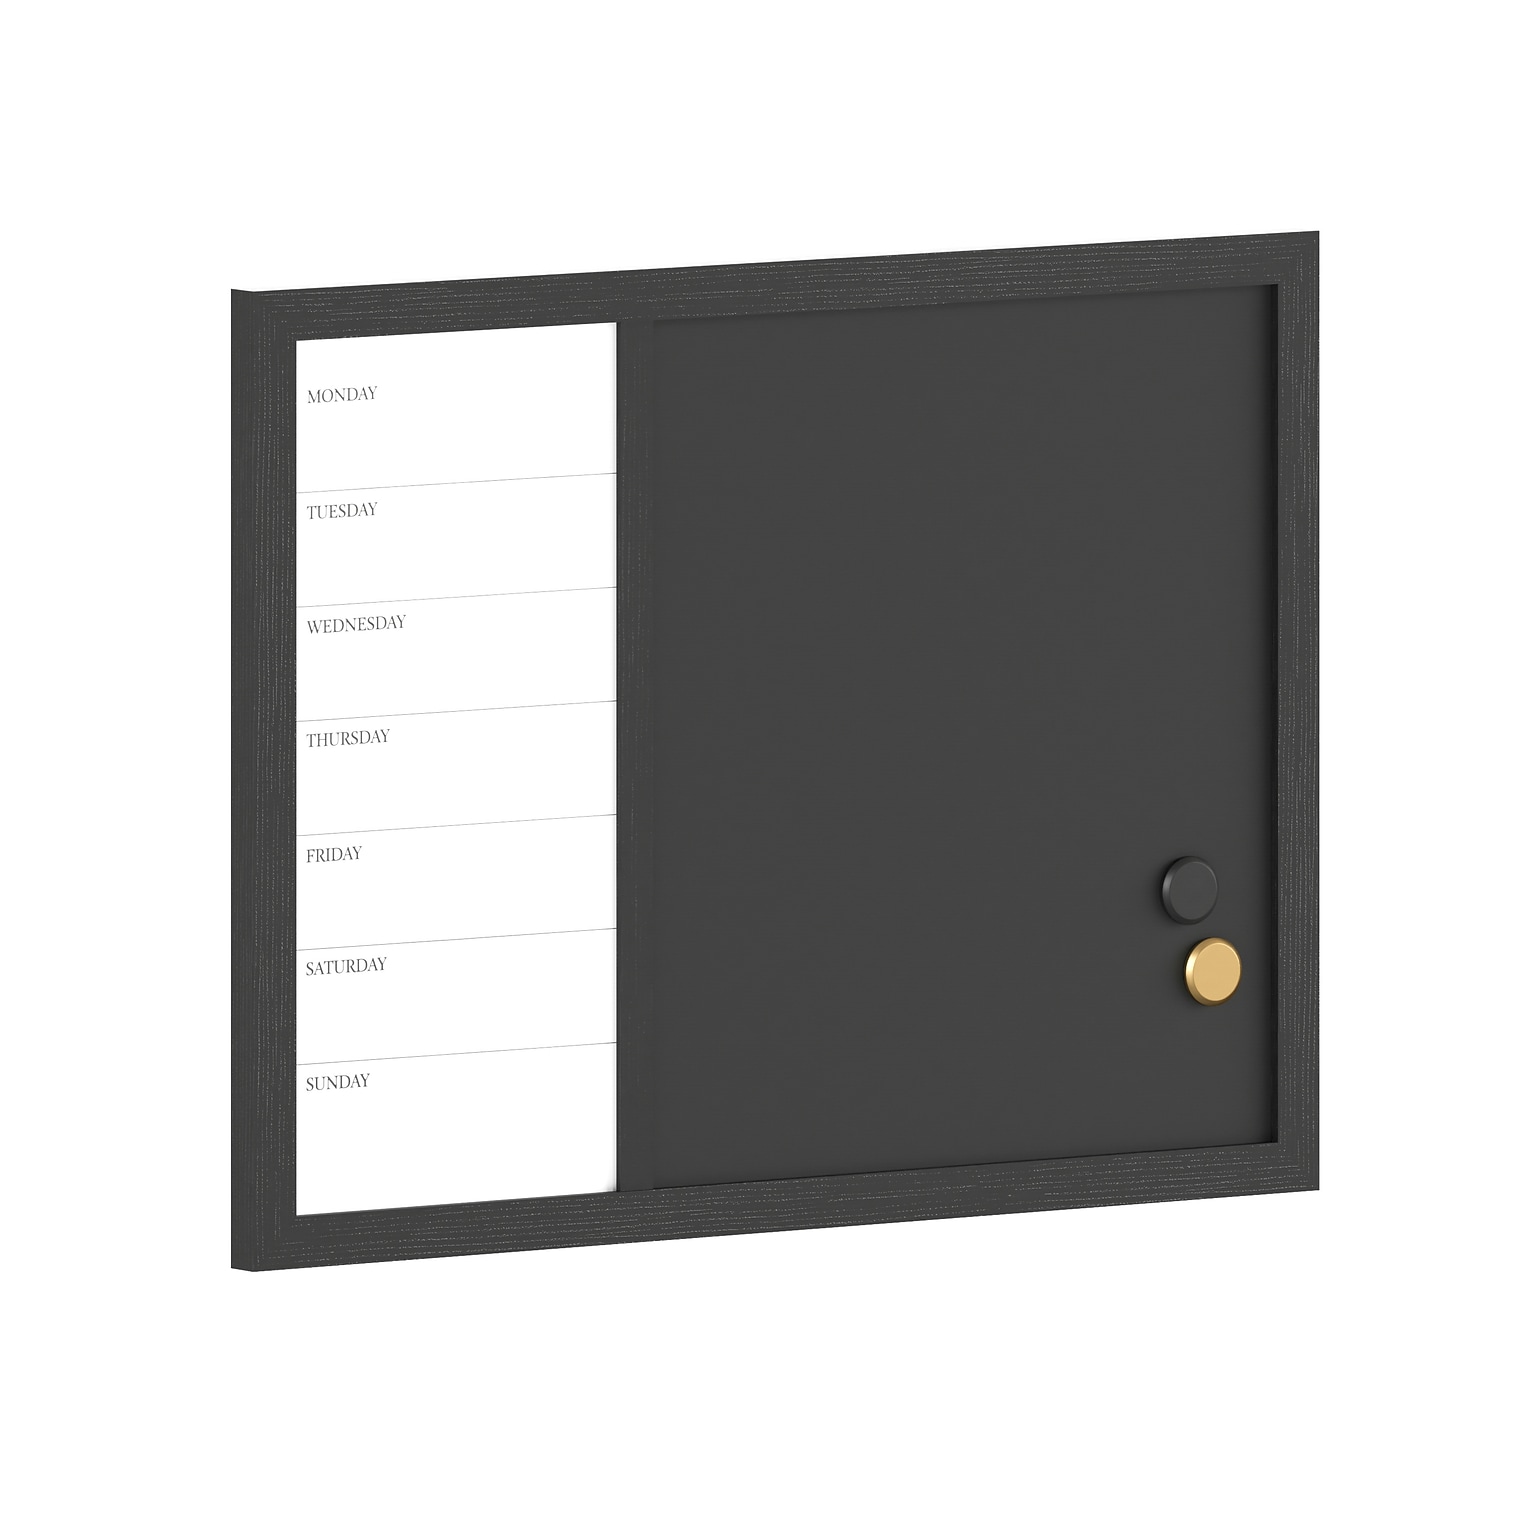 Martha Stewart Everette Magnetic Chalk-Dry Erase Weekly Calendar Combo Set, Engineered Wood Frame, 24x18 (BRPMCO1M24561BK)